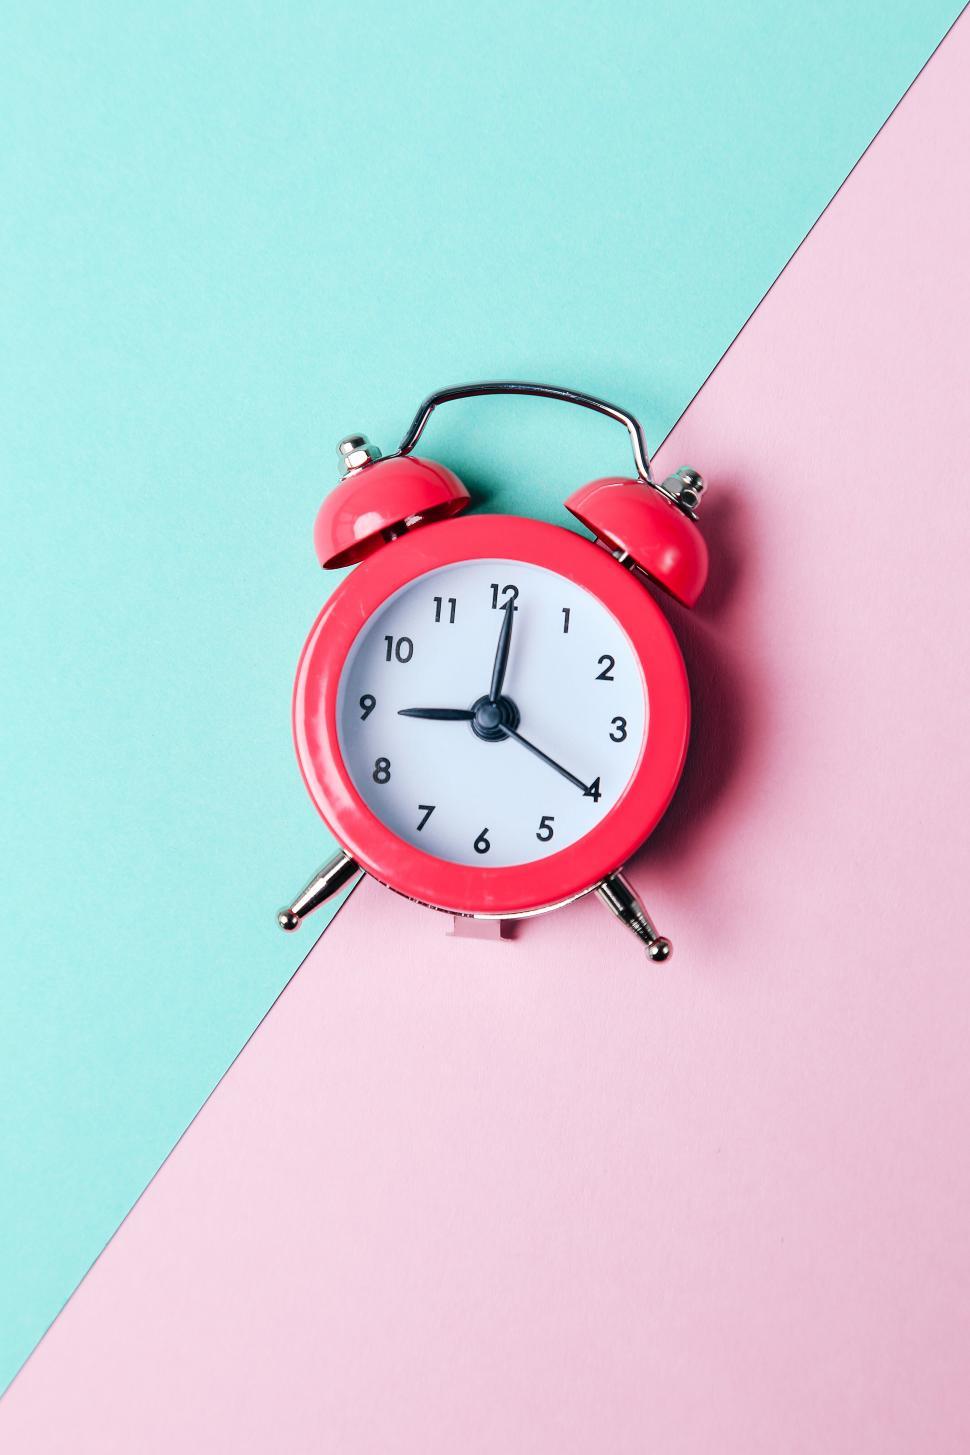 Free Image of Red alarm clock, pastel background 